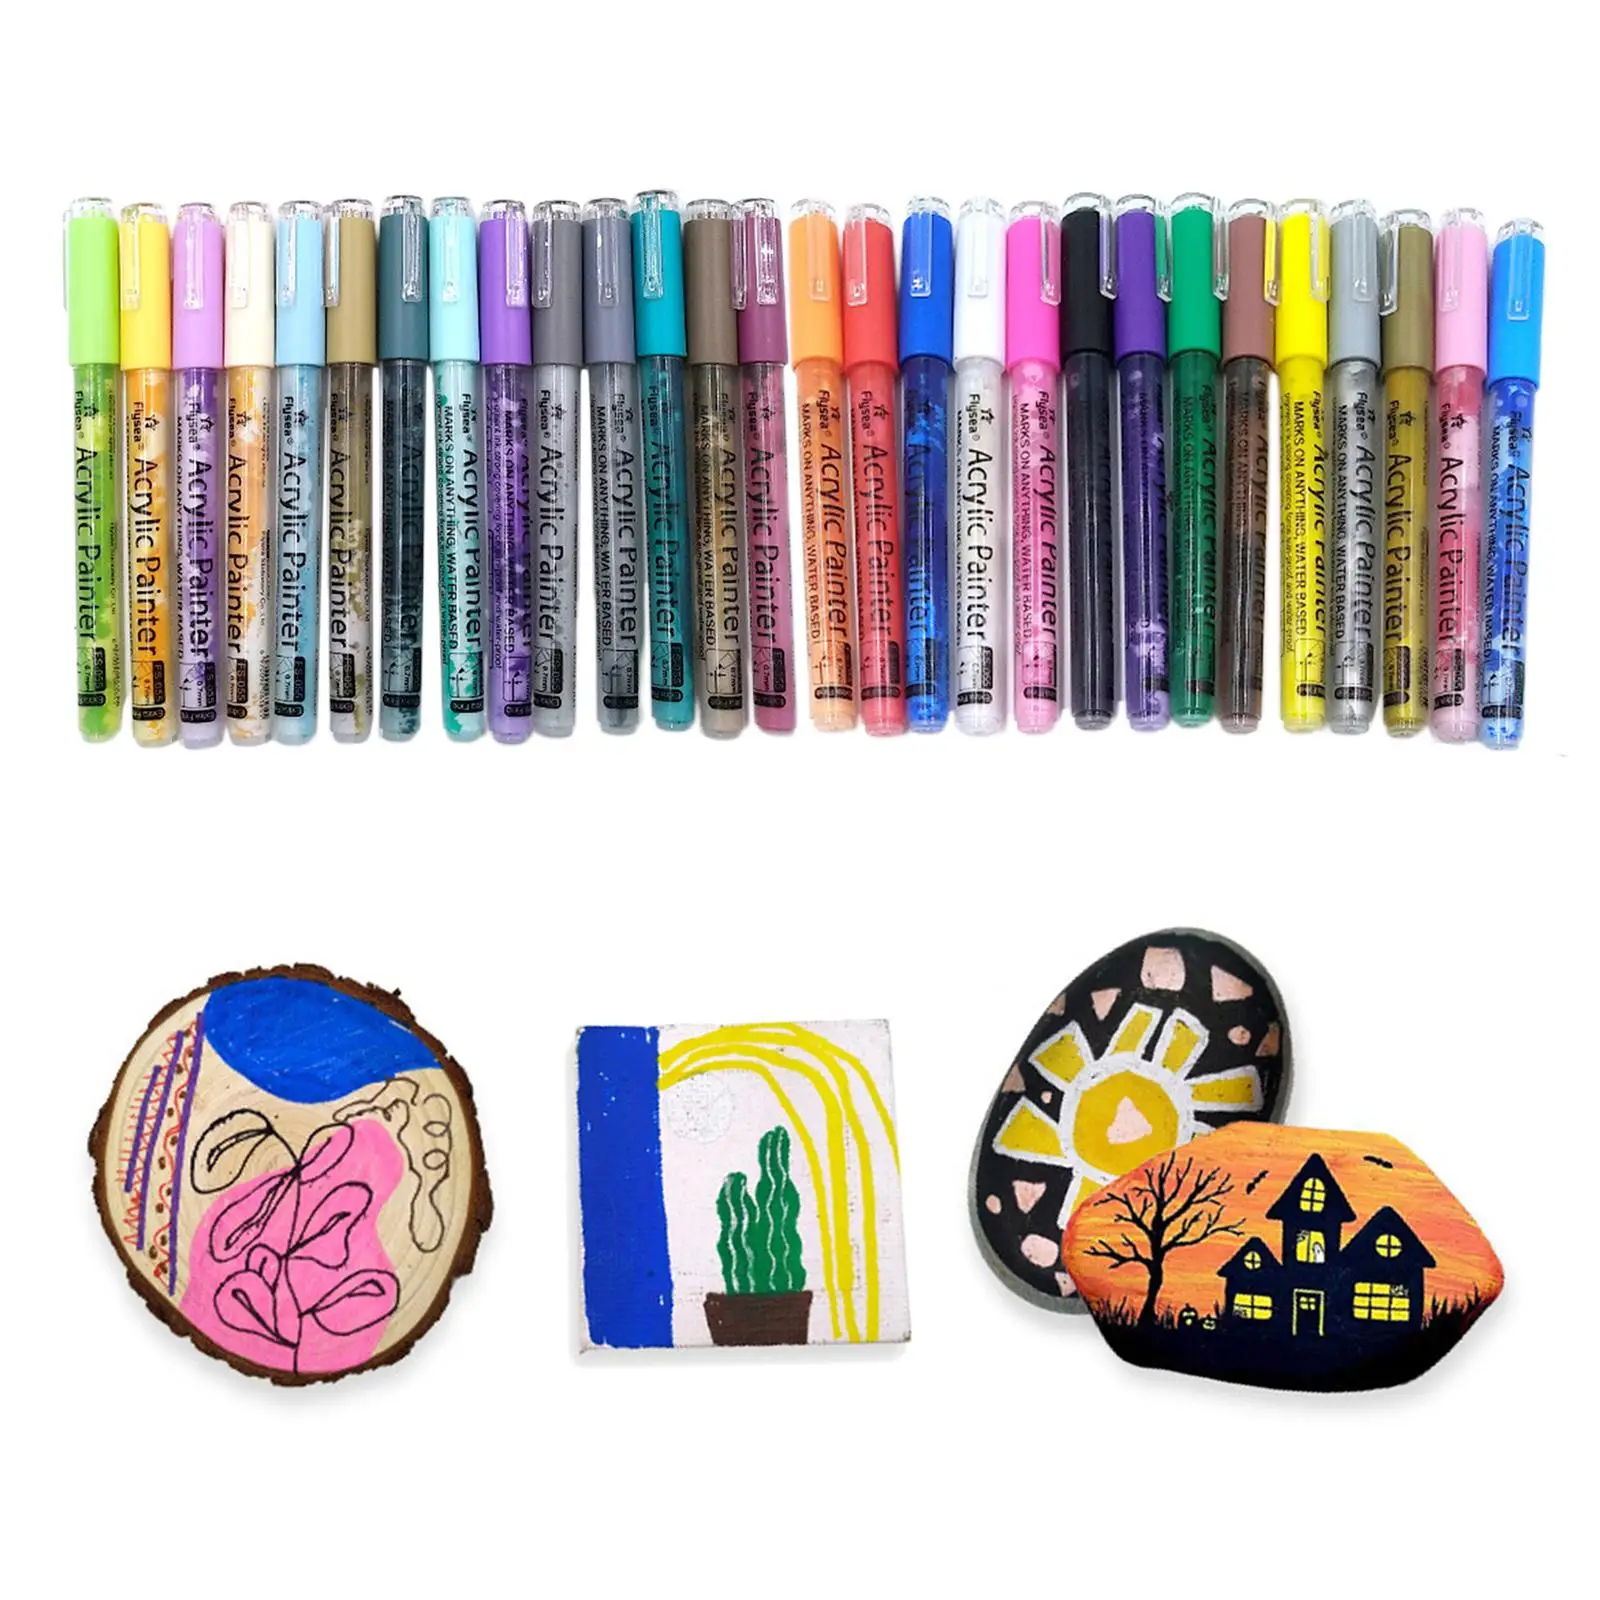 28Pcs Acrylic Paint Pens 0.7mm 2 Metal Markers Coloring Writing PENS